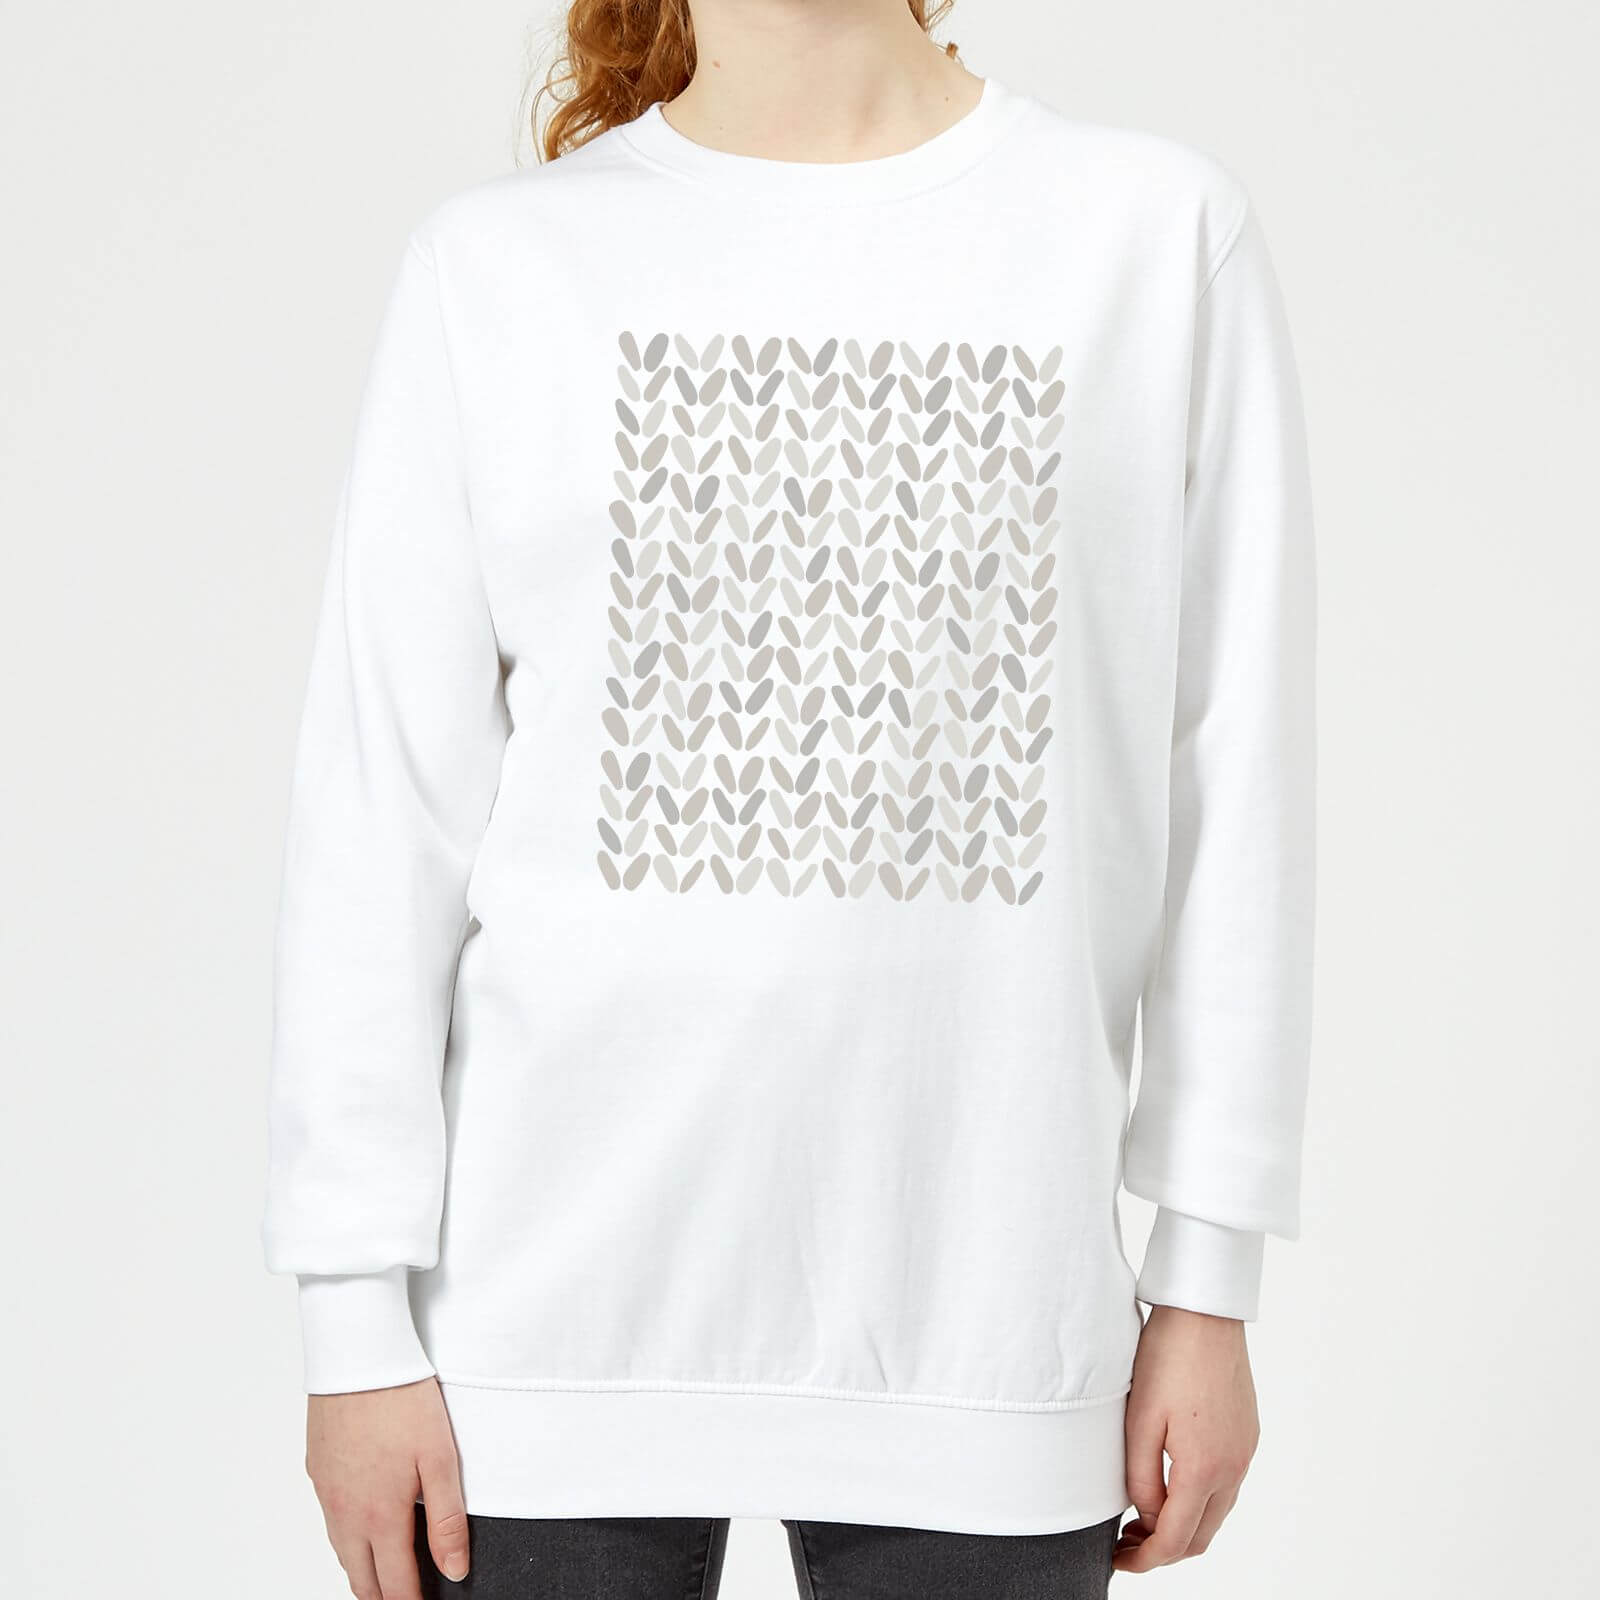 Grey Grassy Blobs Women's Sweatshirt - White - XS - White